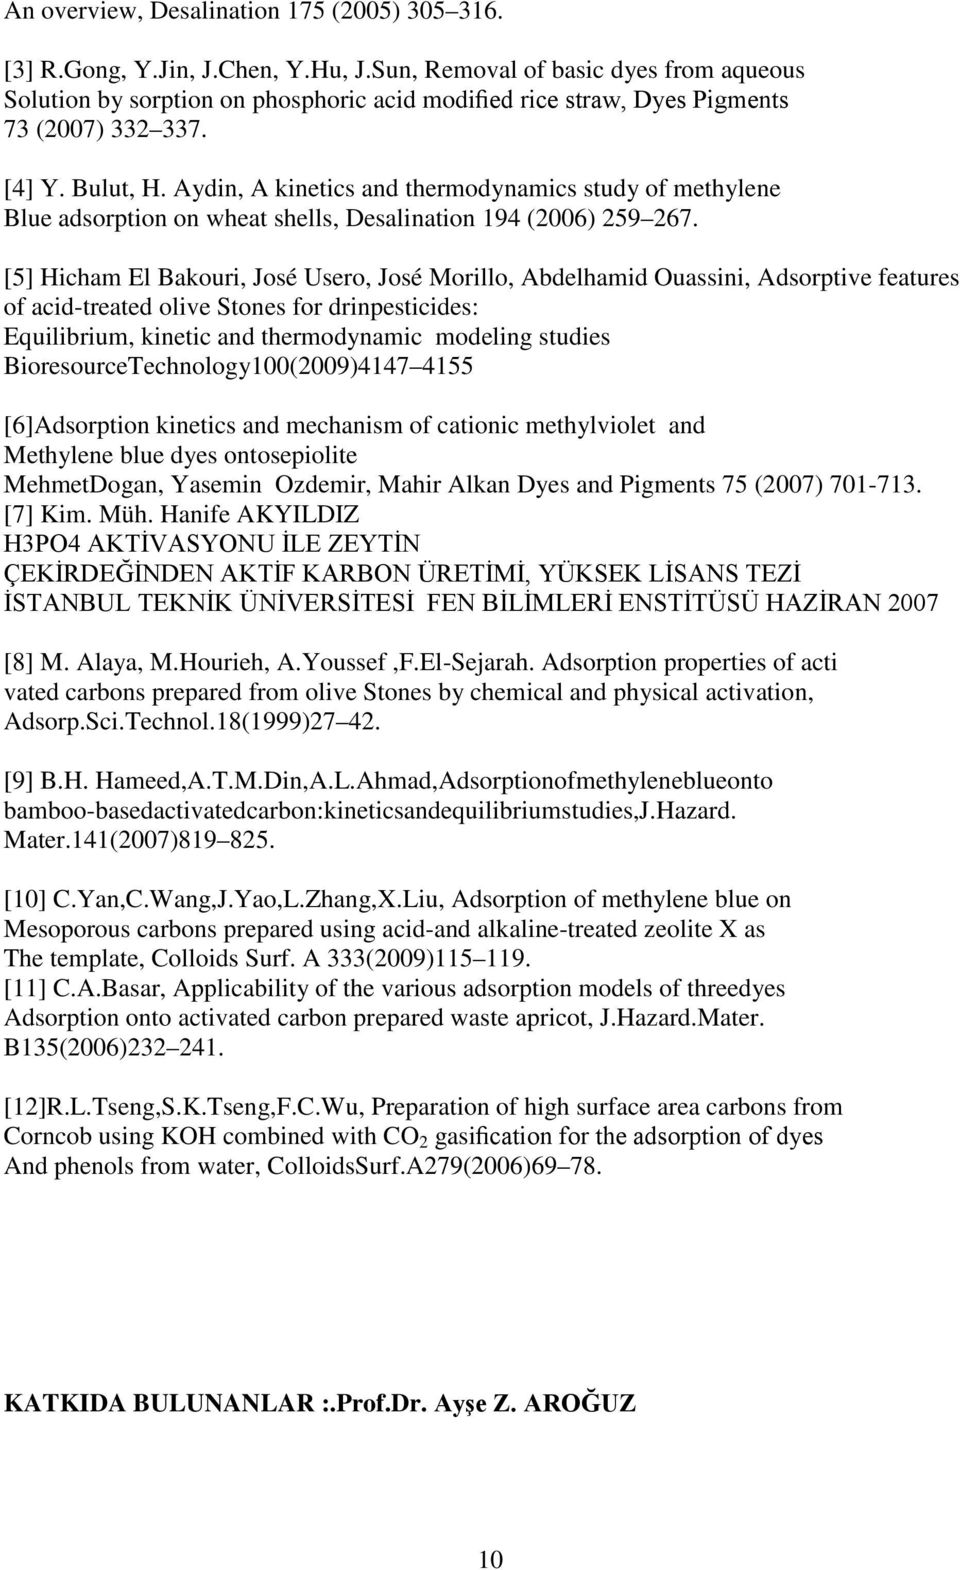 Aydin, A kinetics and thermodynamics study of methylene Blue adsorption on wheat shells, Desalination 194 (26) 259 267.